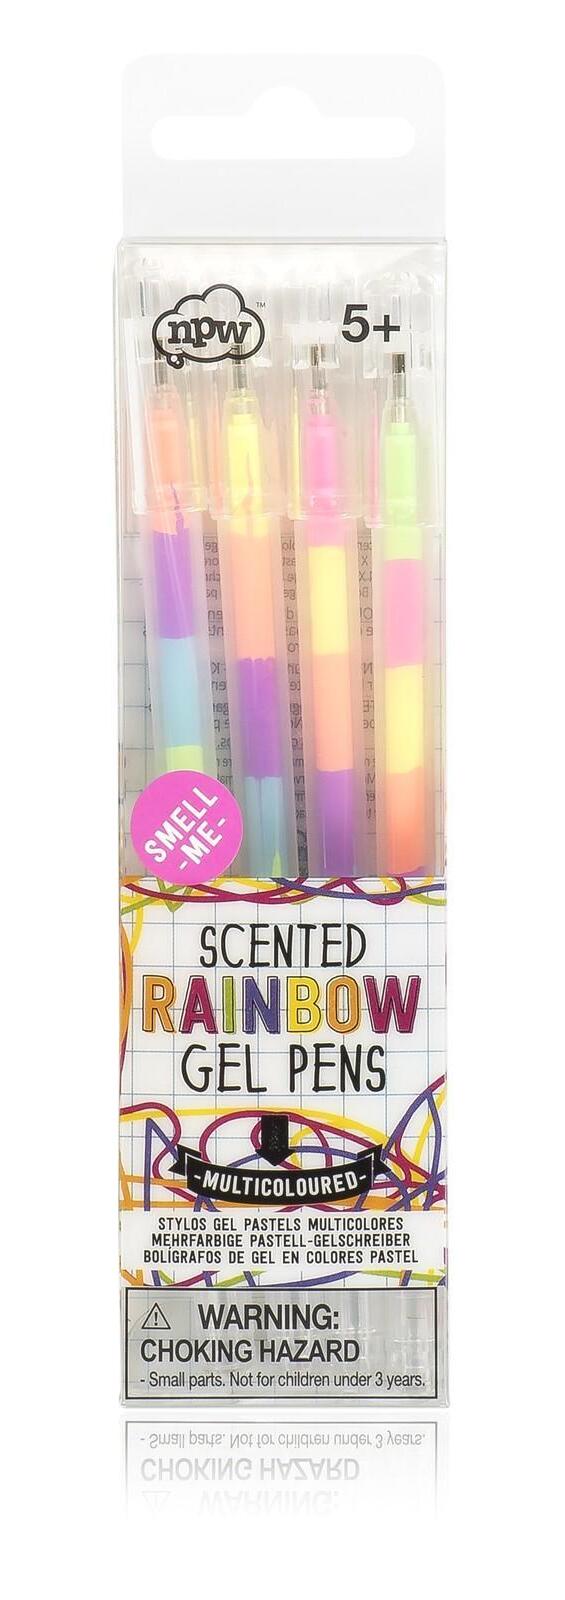 Scented Rainbow Gel Pens